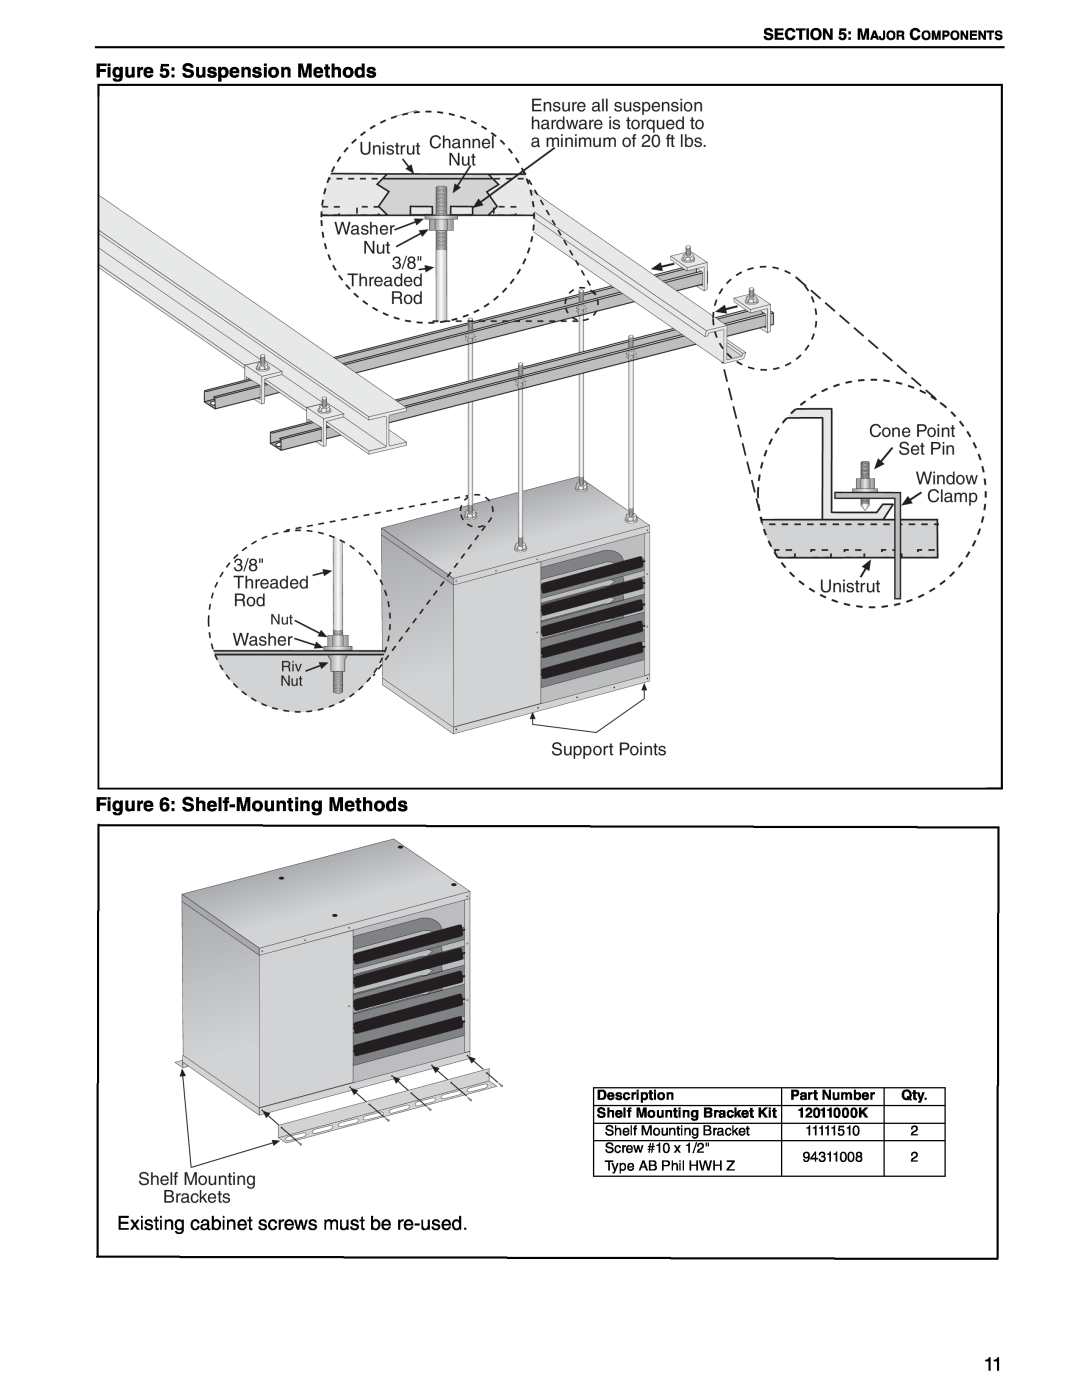 Roberts Gorden 60, 75, 100, 125, 45, 30 Suspension Methods, Shelf-MountingMethods, Existing cabinet screws must be re-used 